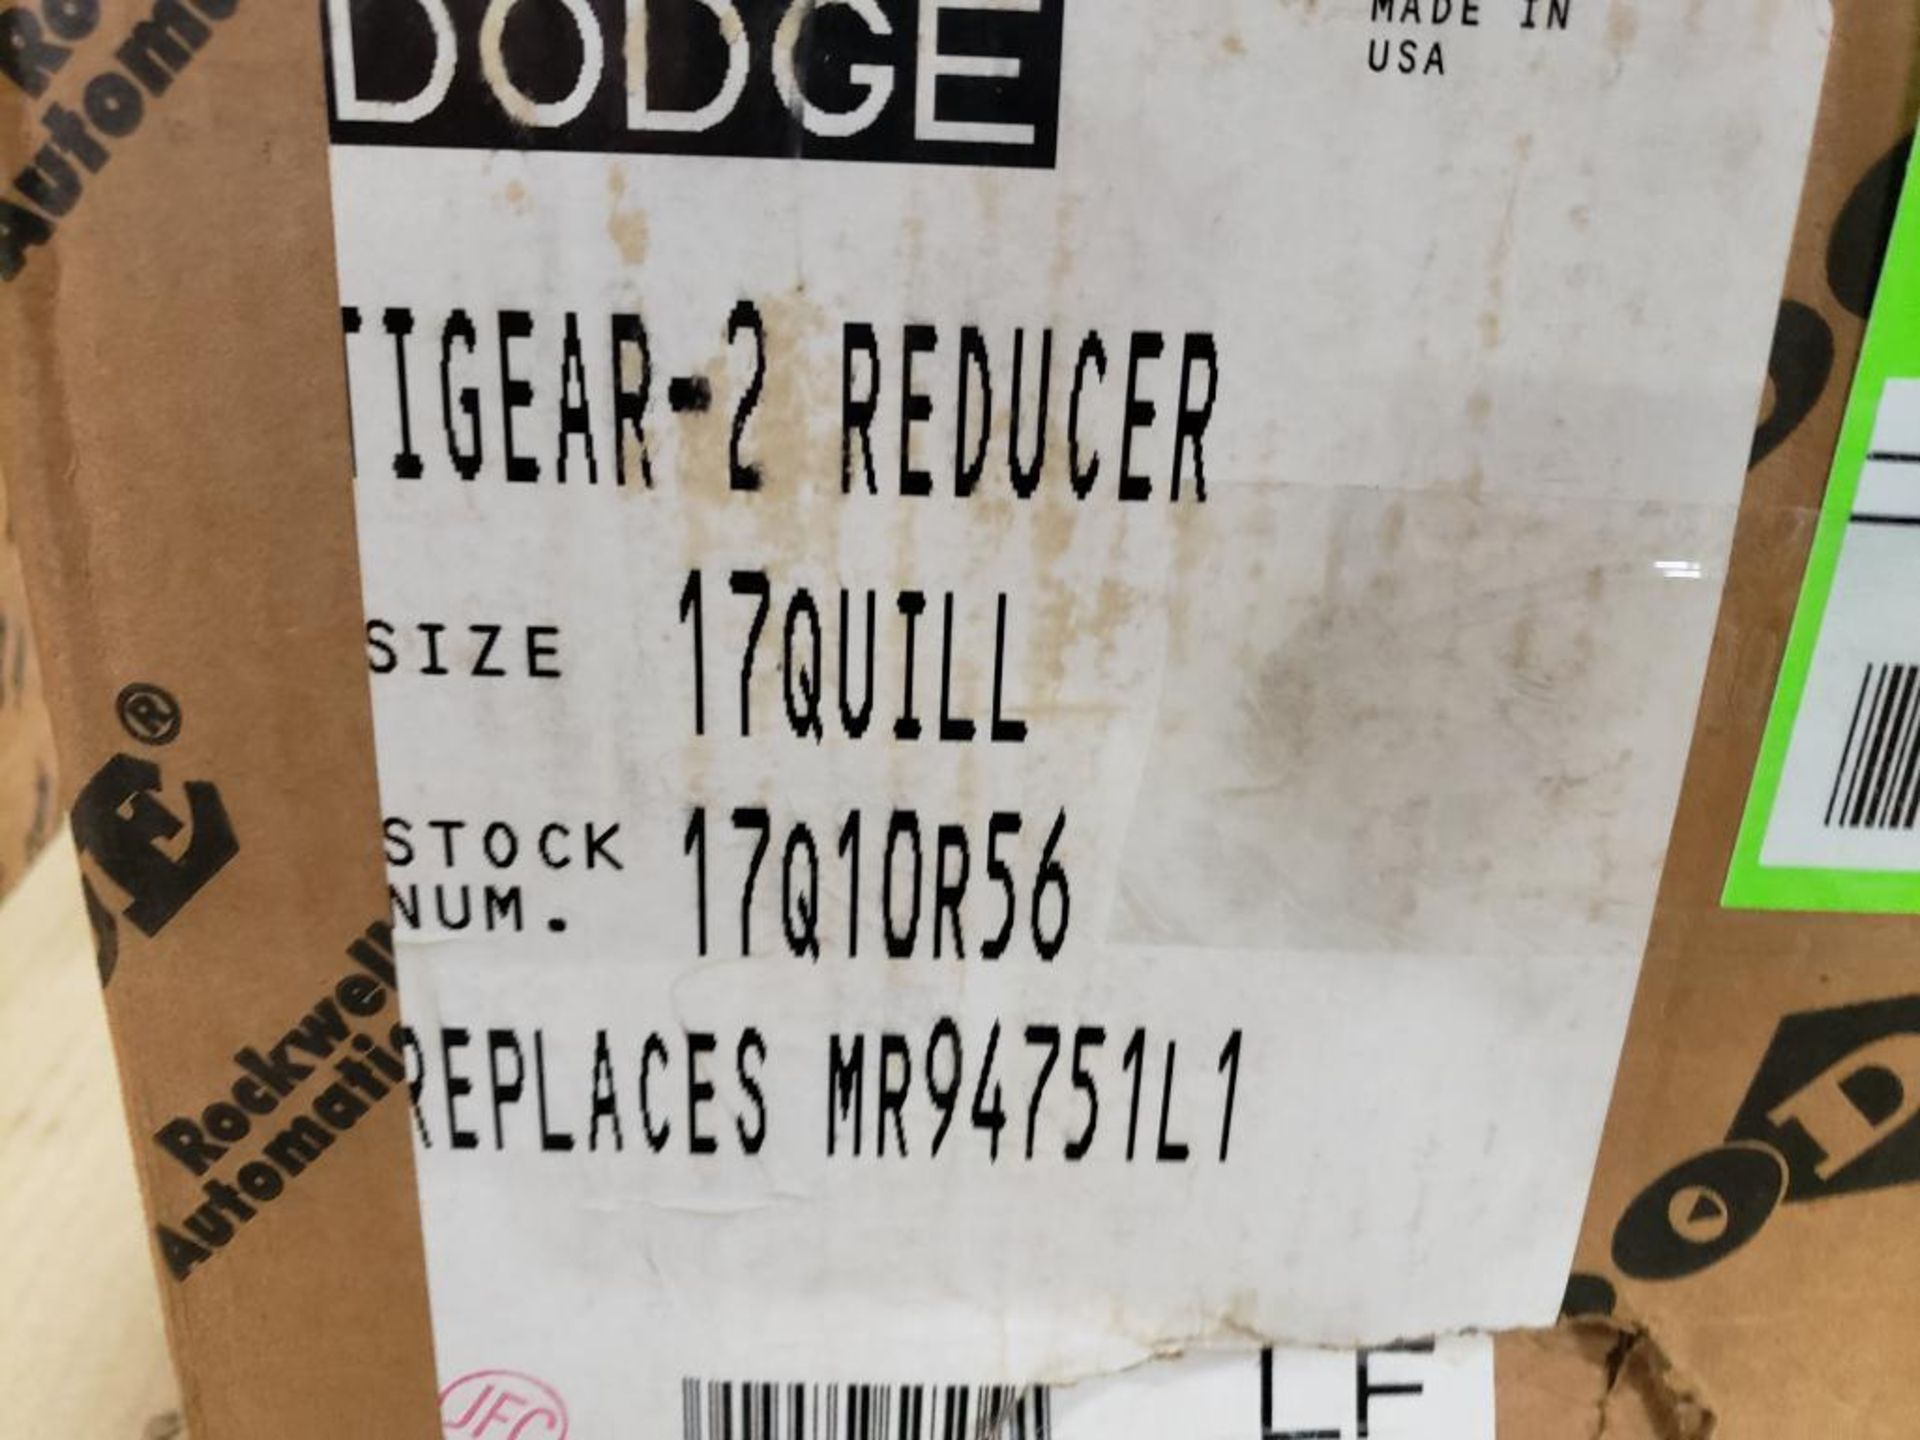 Qty 3 - Dodge Tigear-2 reducer 17QULL 17Q10R56. New in box. - Image 2 of 5